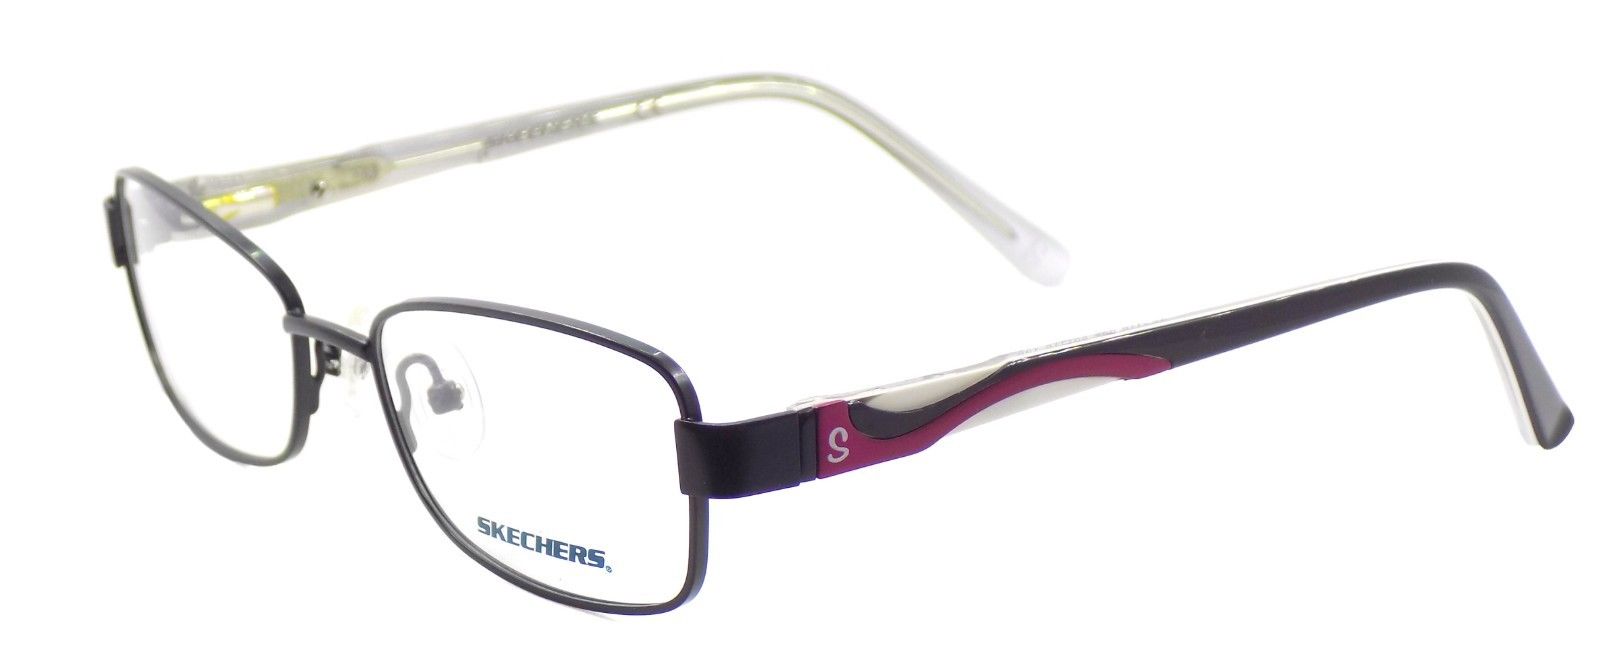 1-SKECHERS SE2116 002 Women's Eyeglasses Frames 50-16-135 Satin Black + CASE-664689776382-IKSpecs